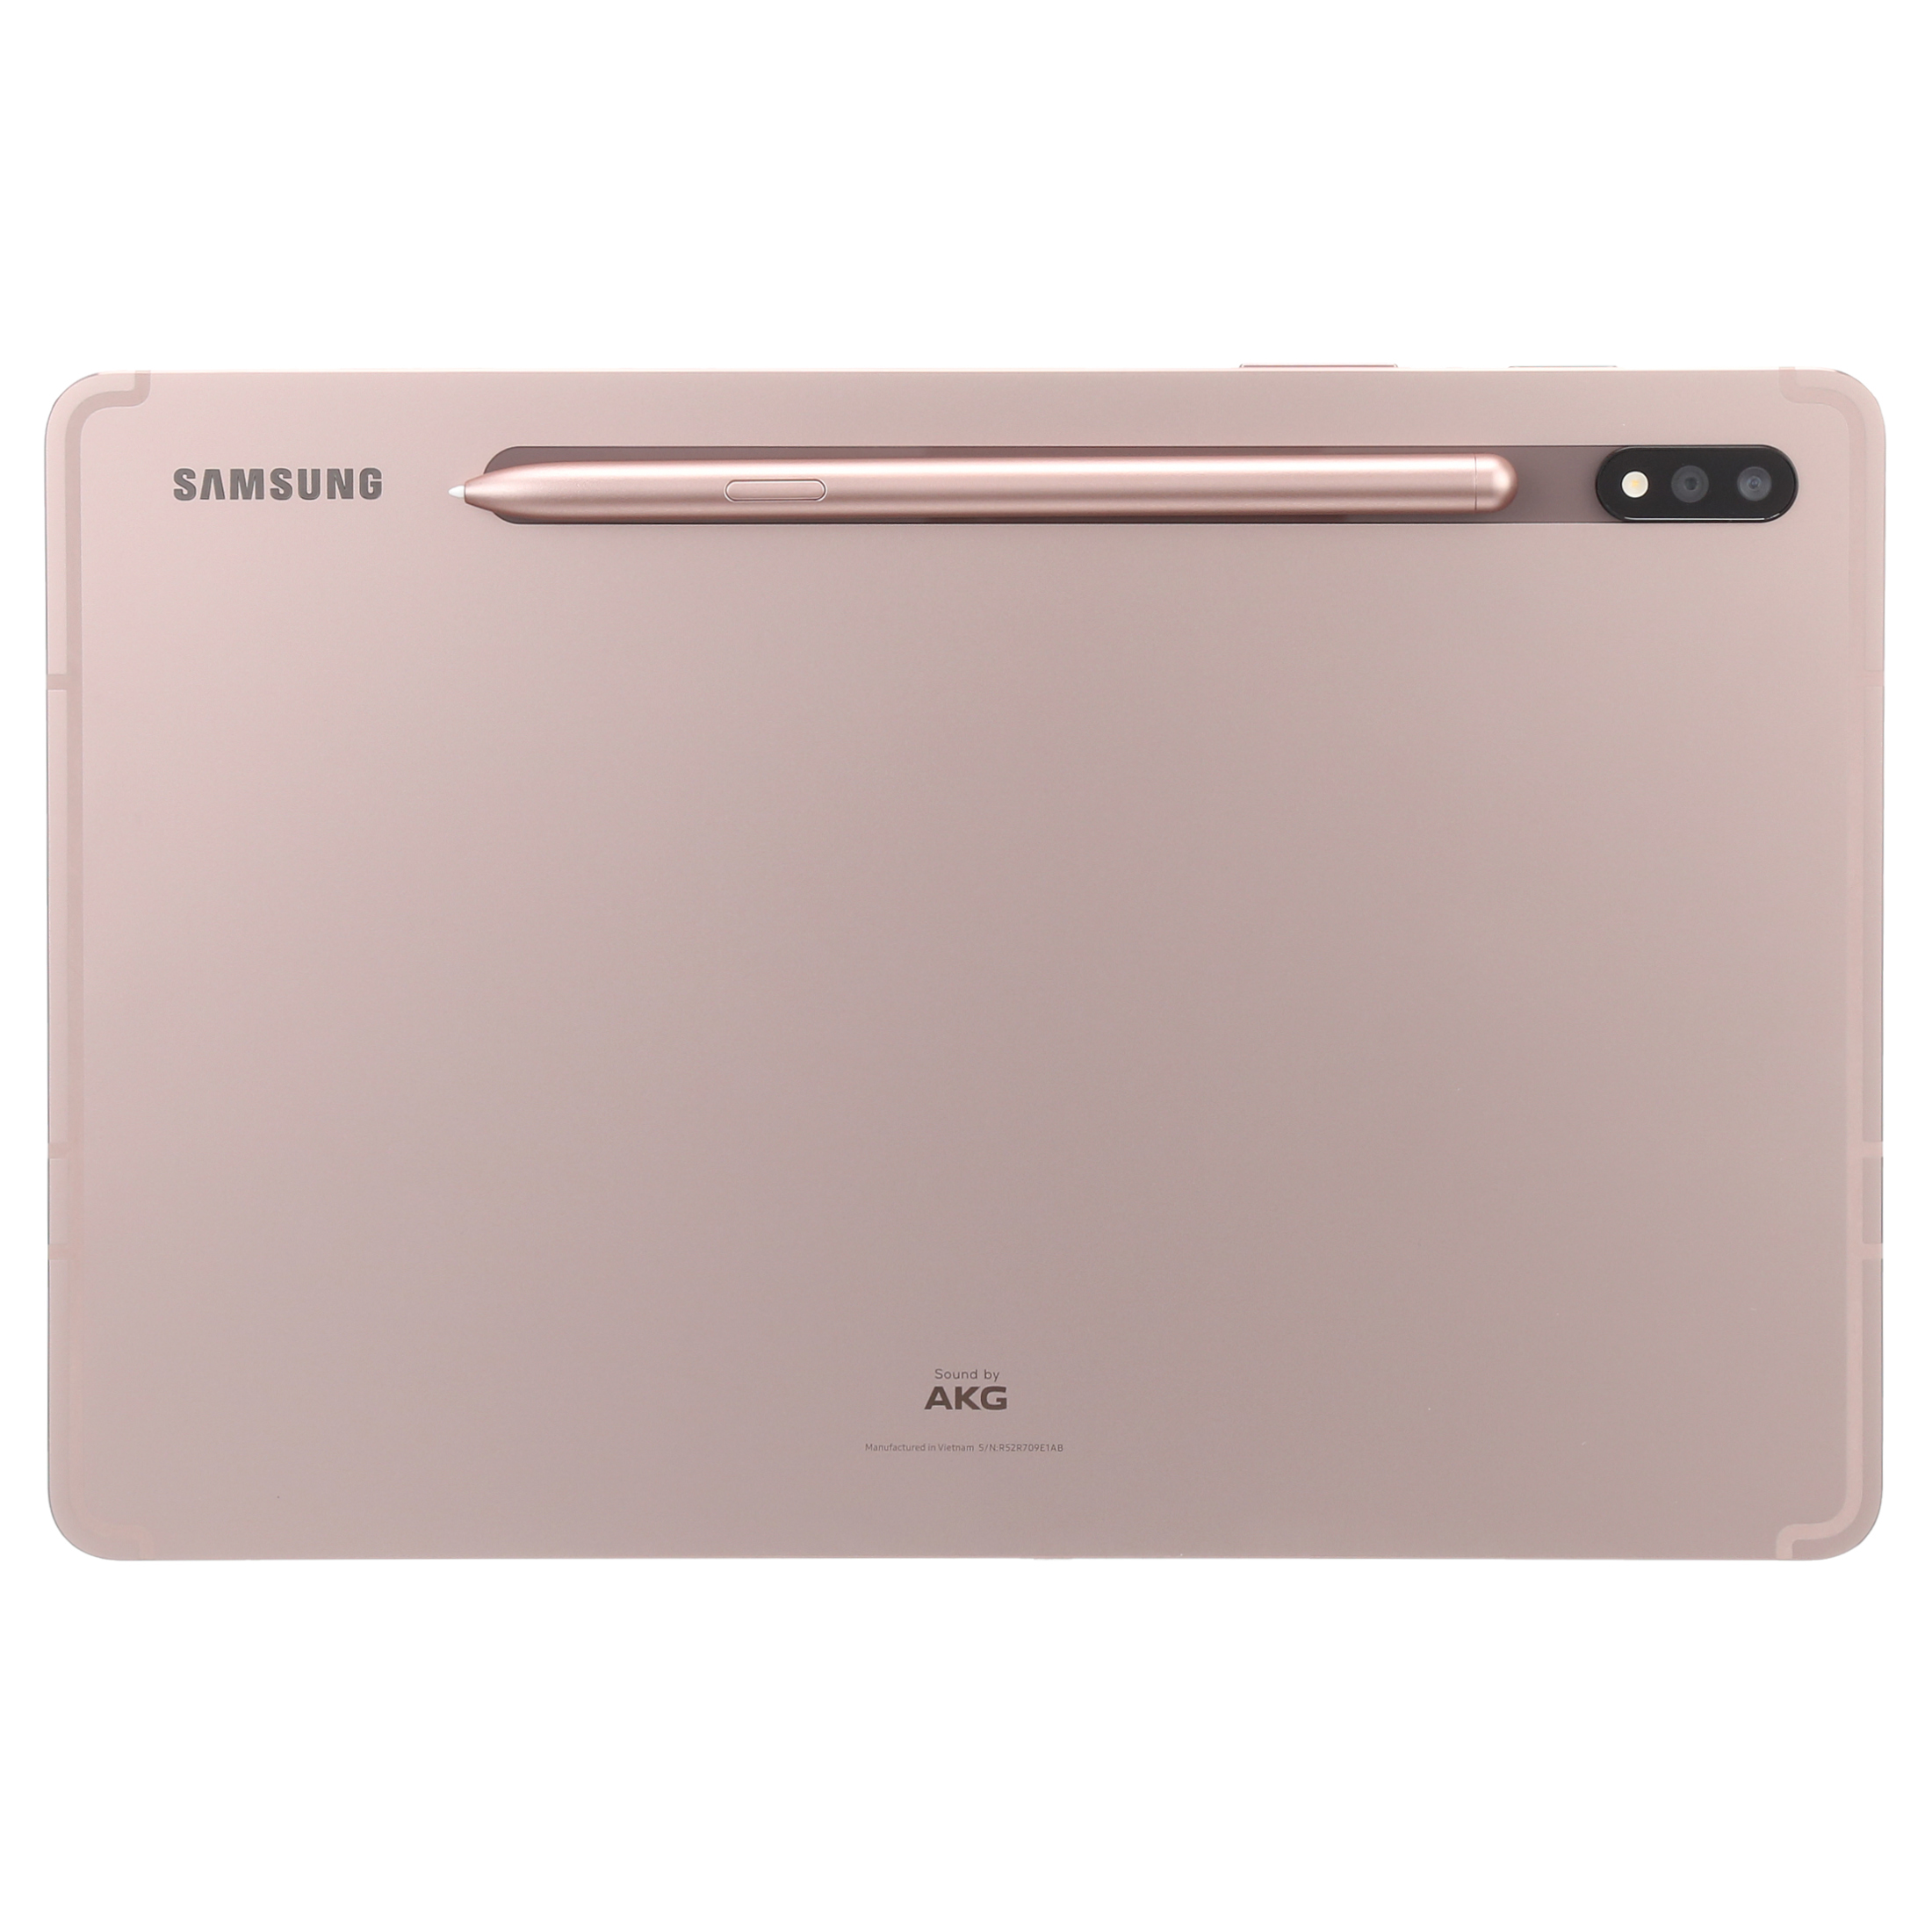 SAMSUNG Galaxy Tab S7 128GB Mystic Bronze (Wi-Fi) S Pen Included - SM-T870NZNAXAR - image 5 of 15